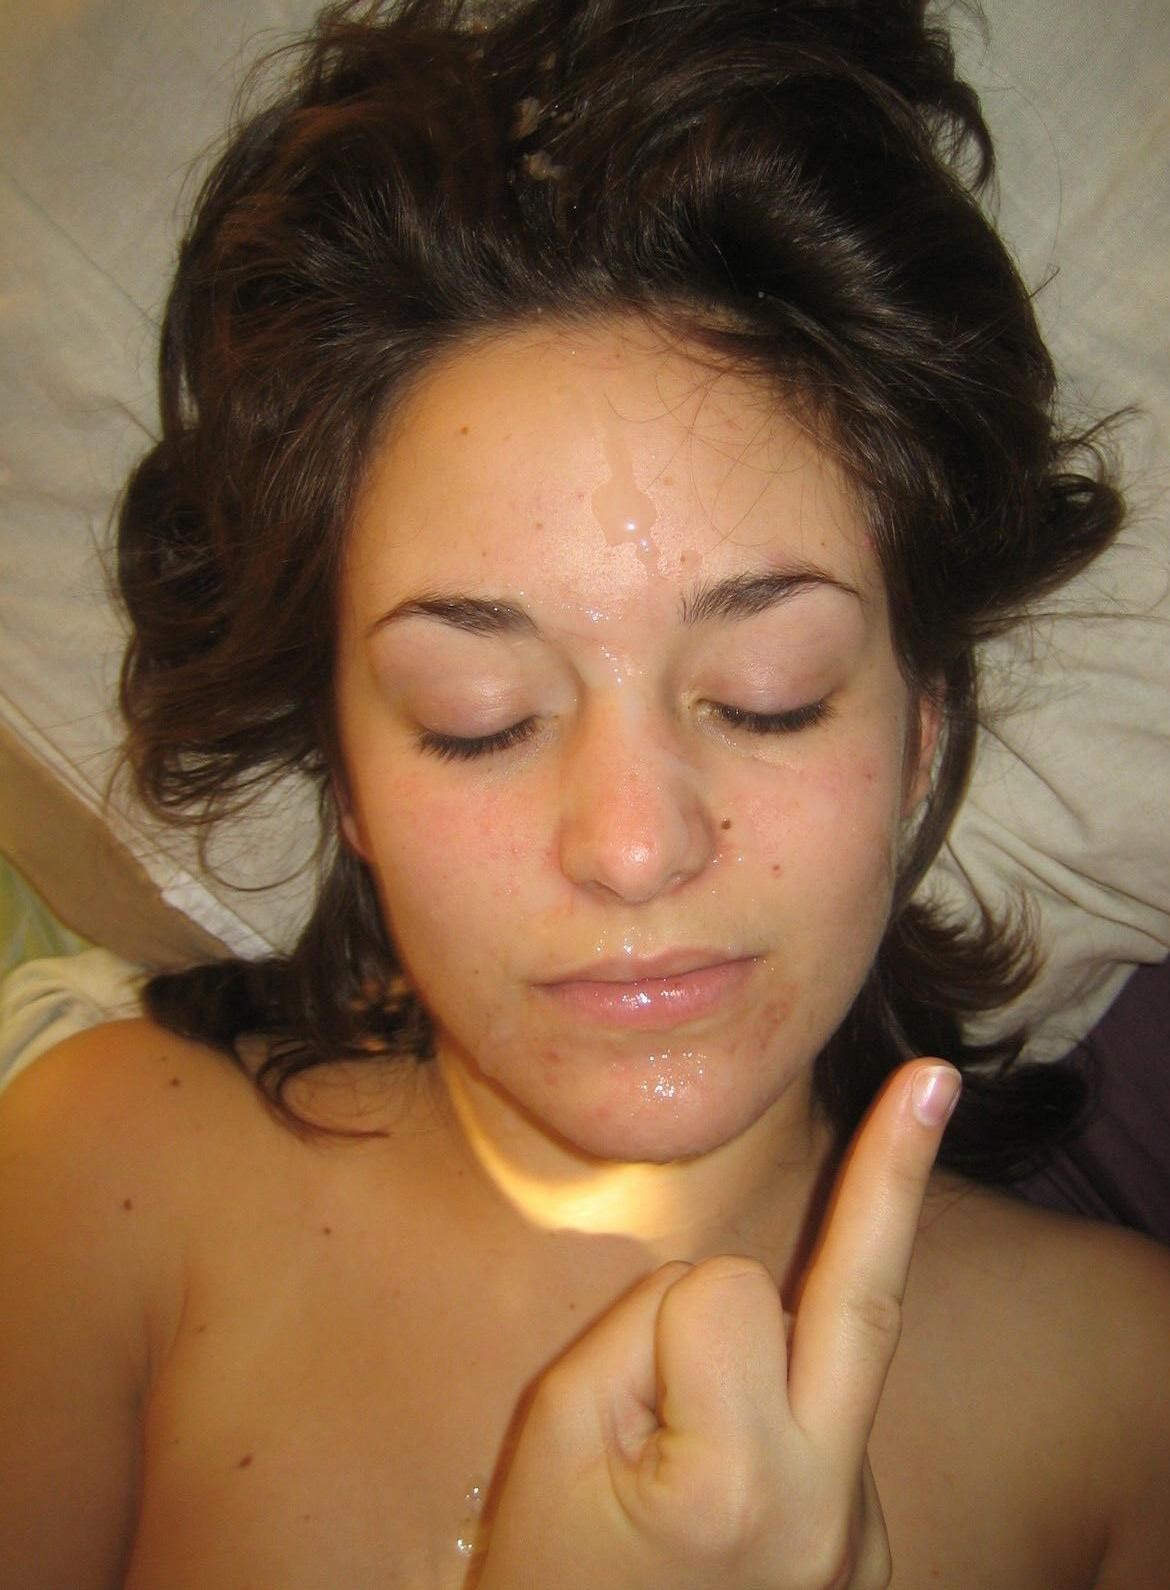 Middle finger facial cumshot (36 pictures) photo